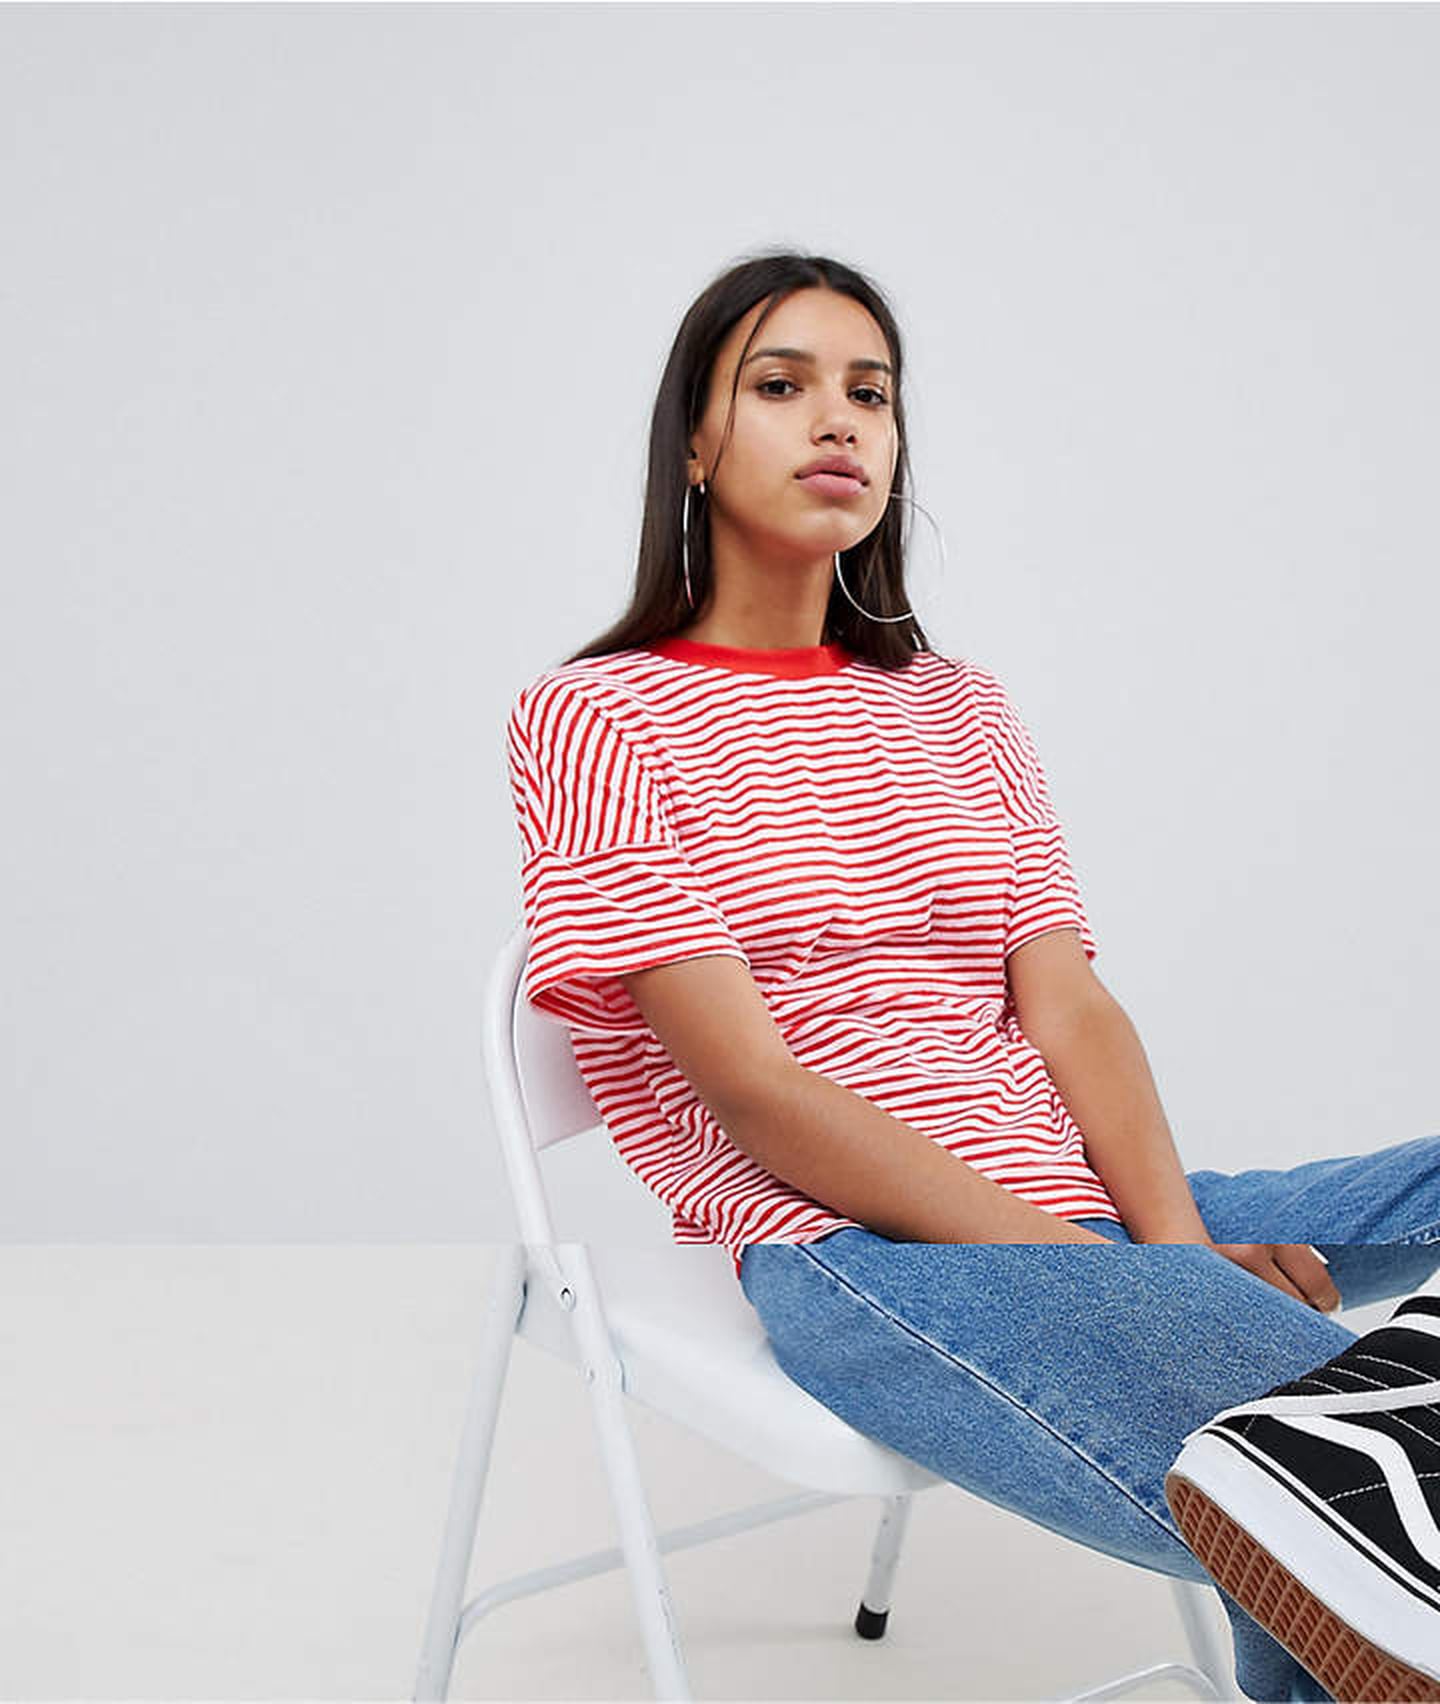 Selena Gomez's Striped T-Shirt at IHOP | POPSUGAR Fashion